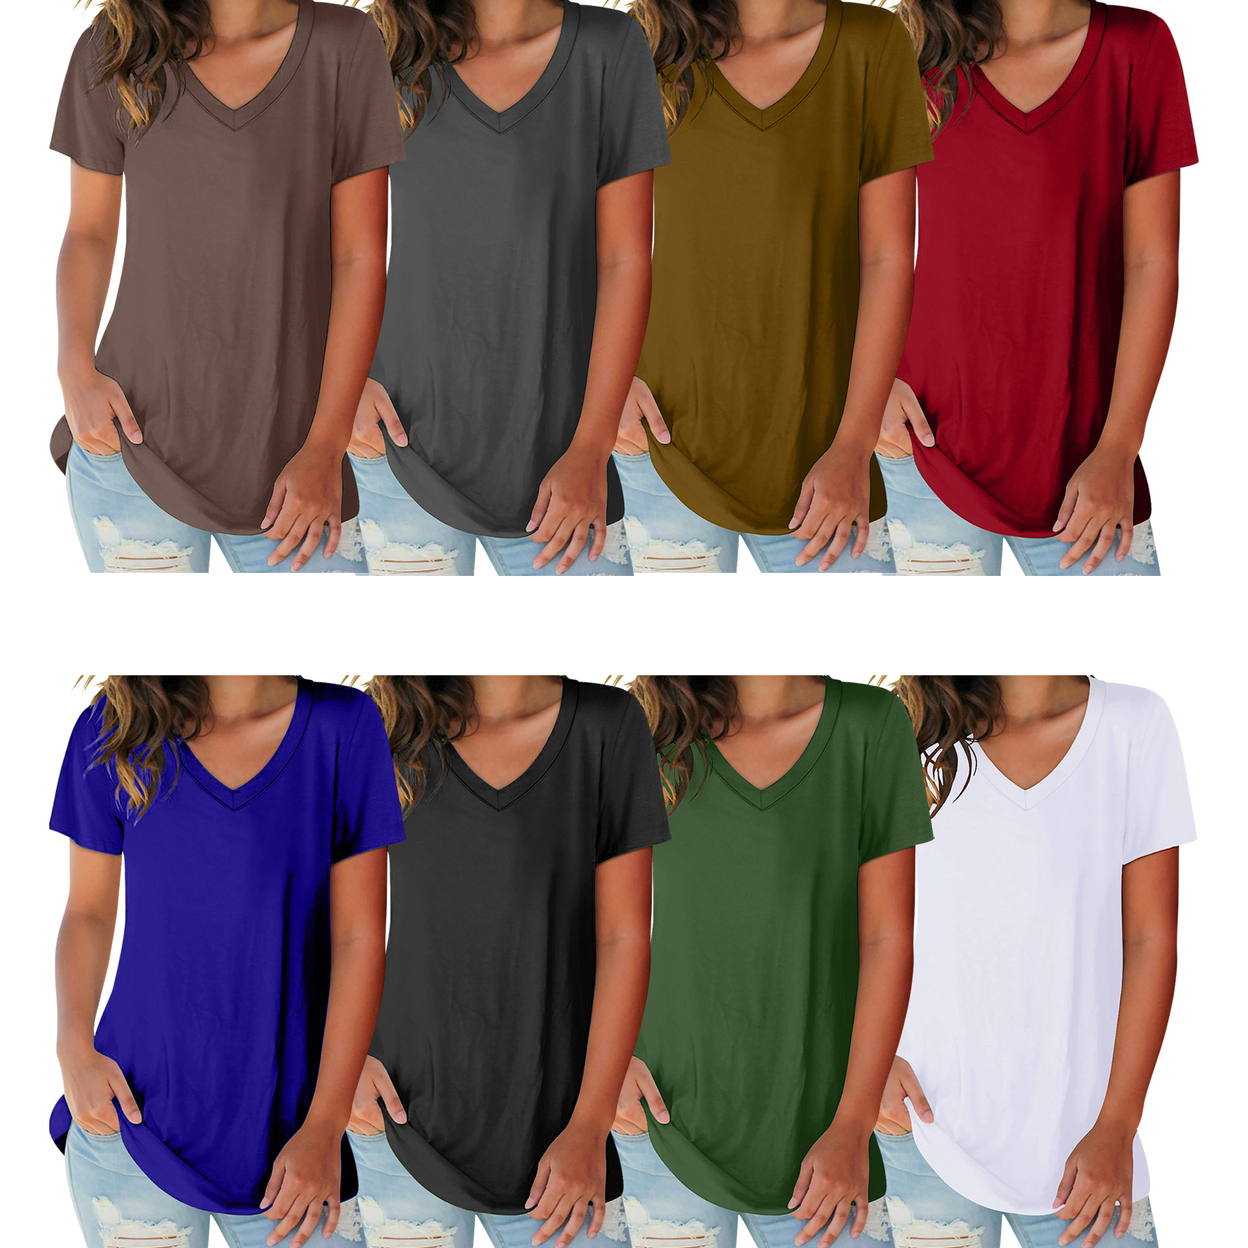 3-Pack: Women's Ultra Soft Smooth Cotton Blend Basic V-Neck Short Sleeve Shirts - Black, White, Green, Medium